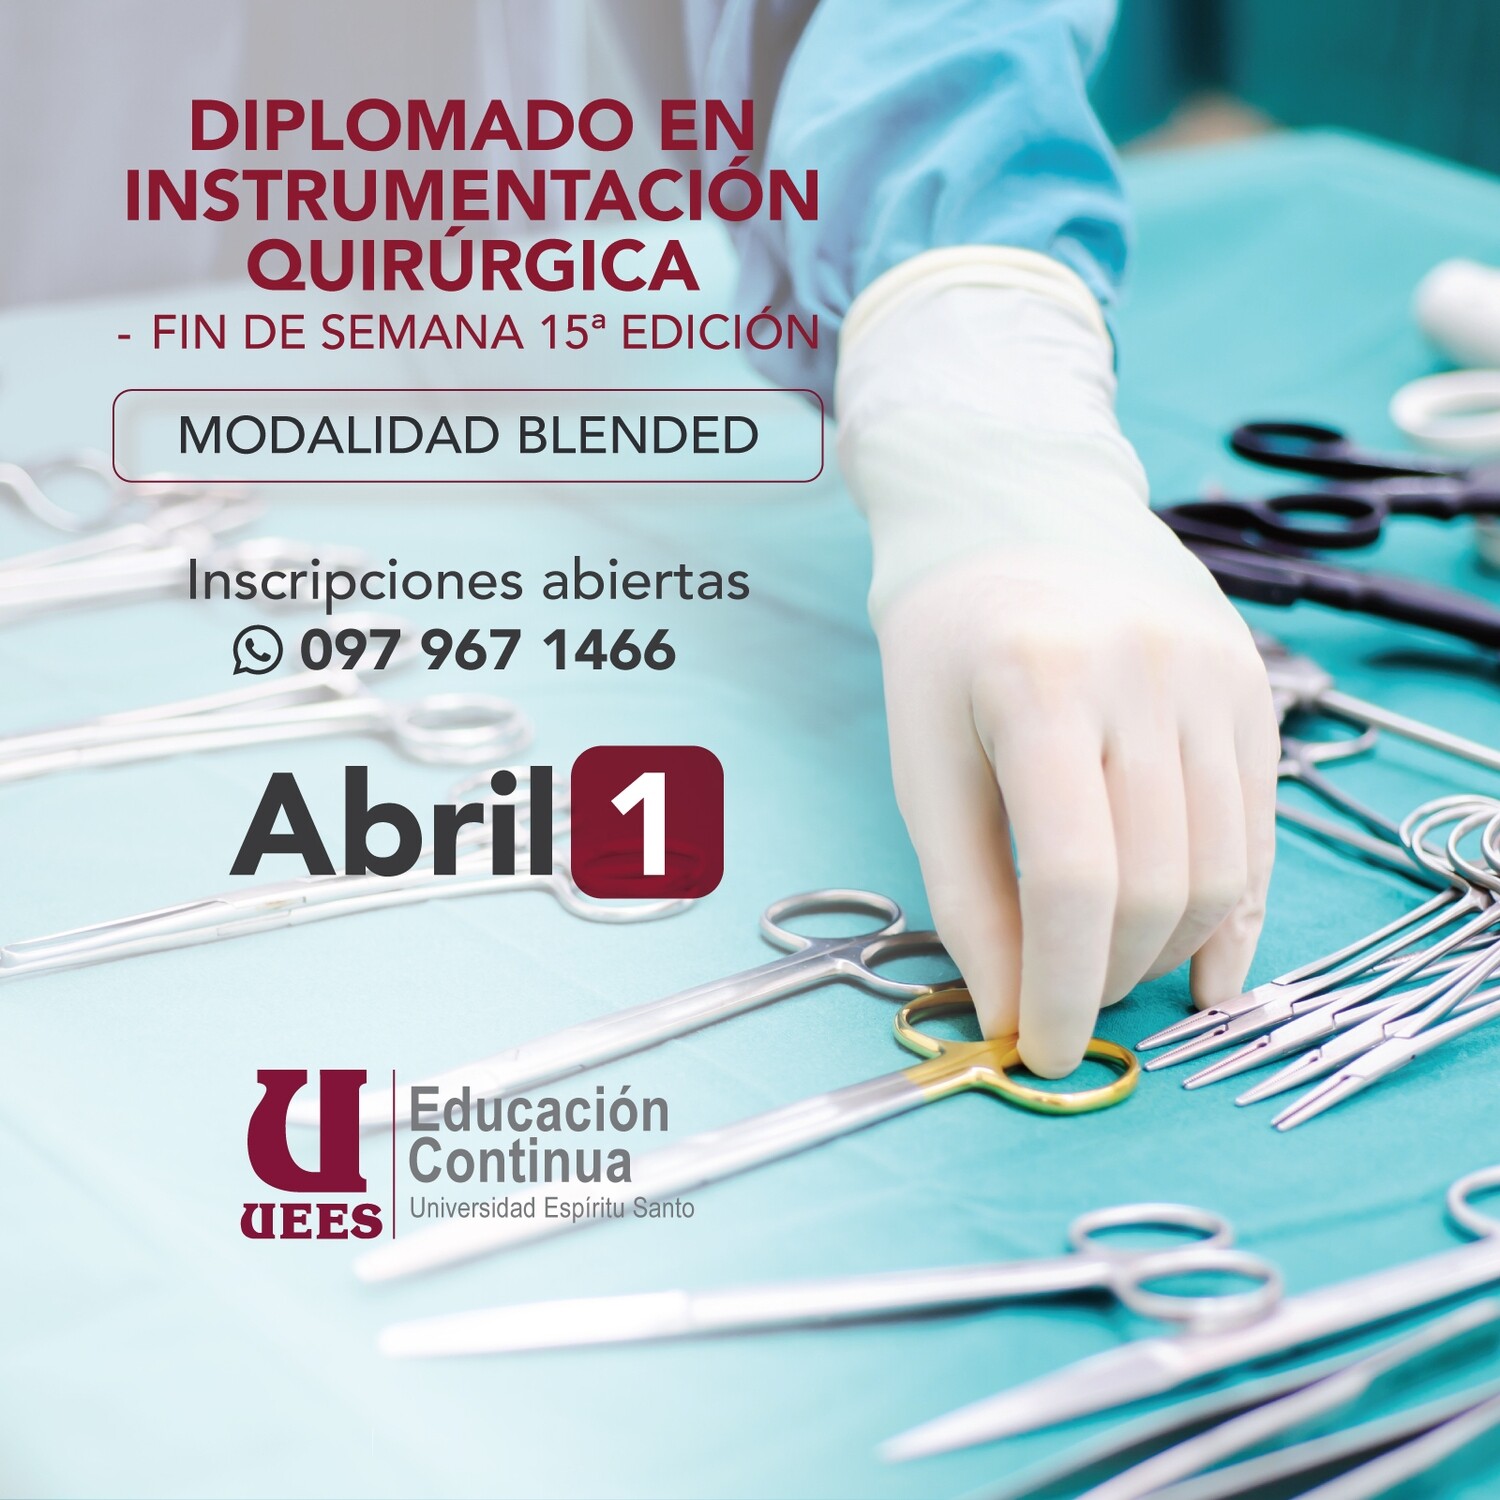 Diplomado de Instrumentación Quirúrgica 15ª edición